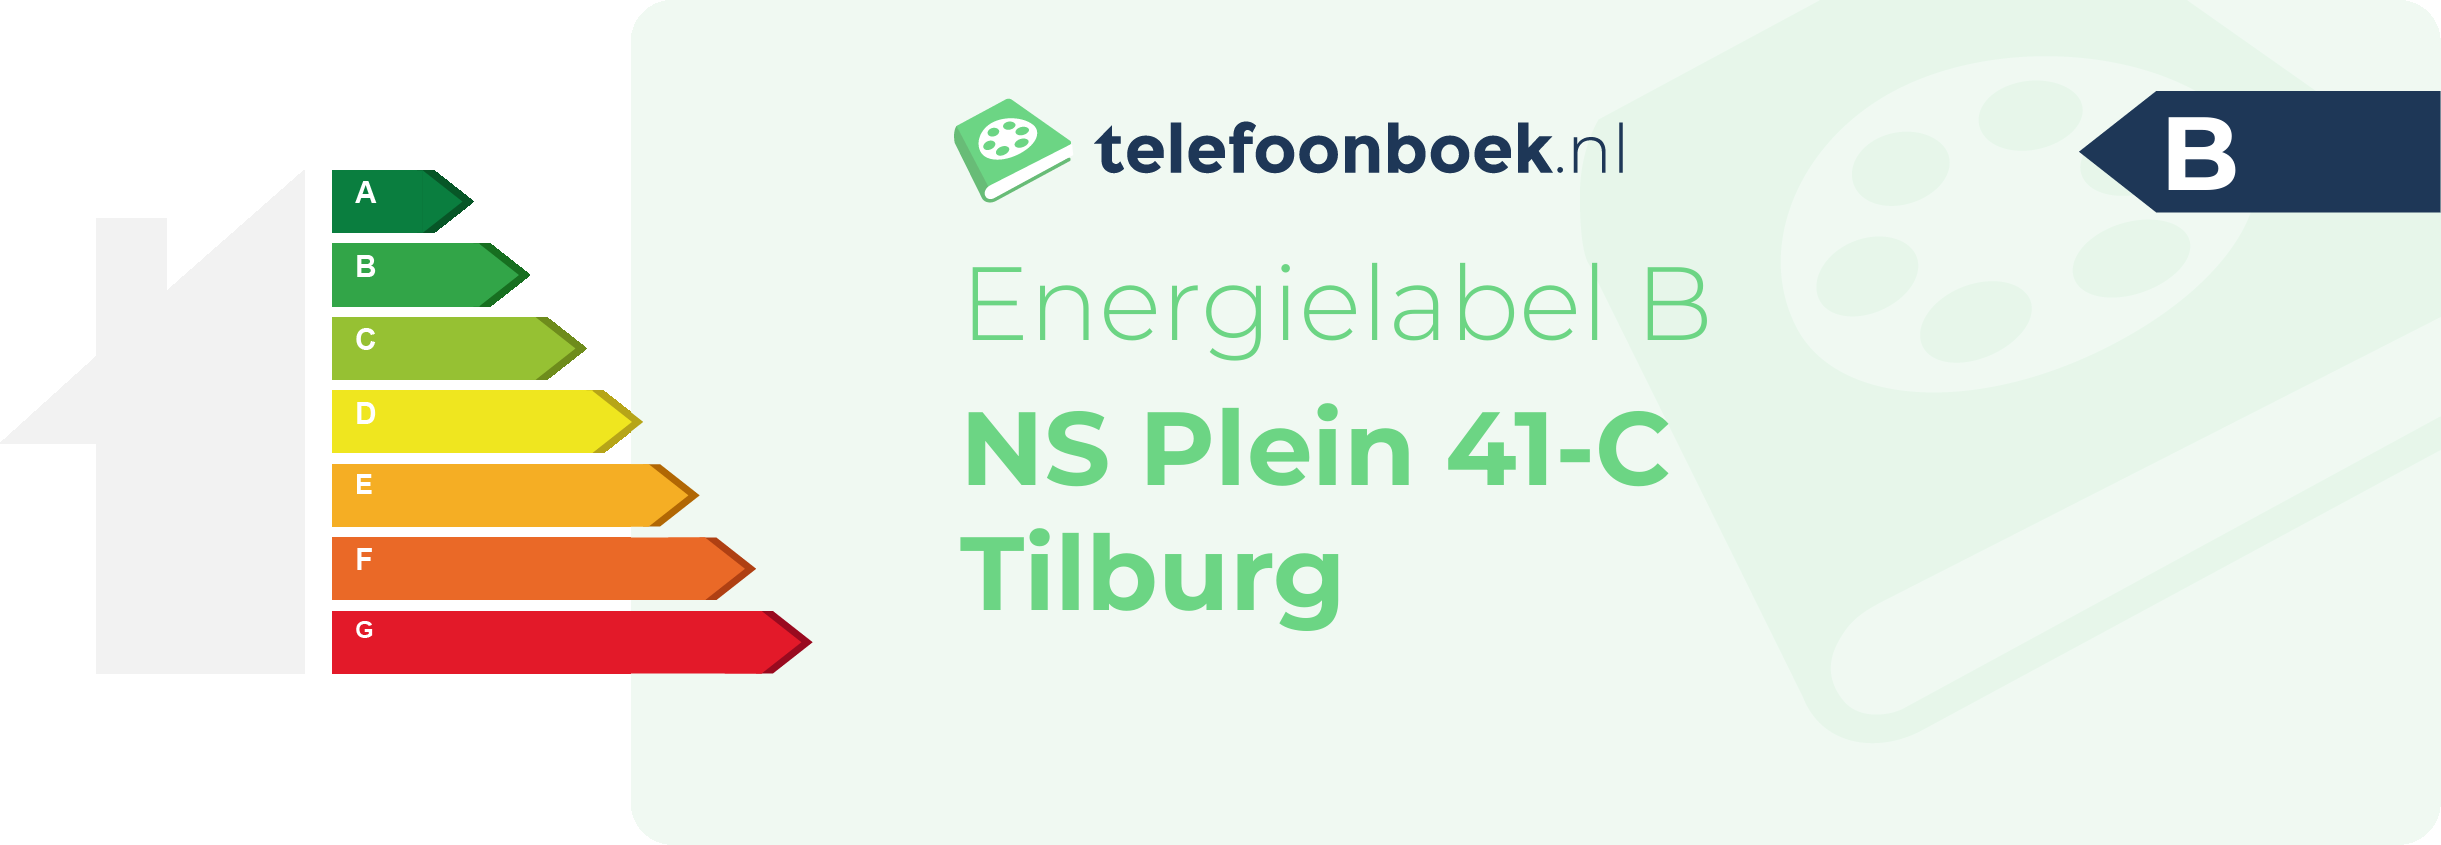 Energielabel NS Plein 41-C Tilburg